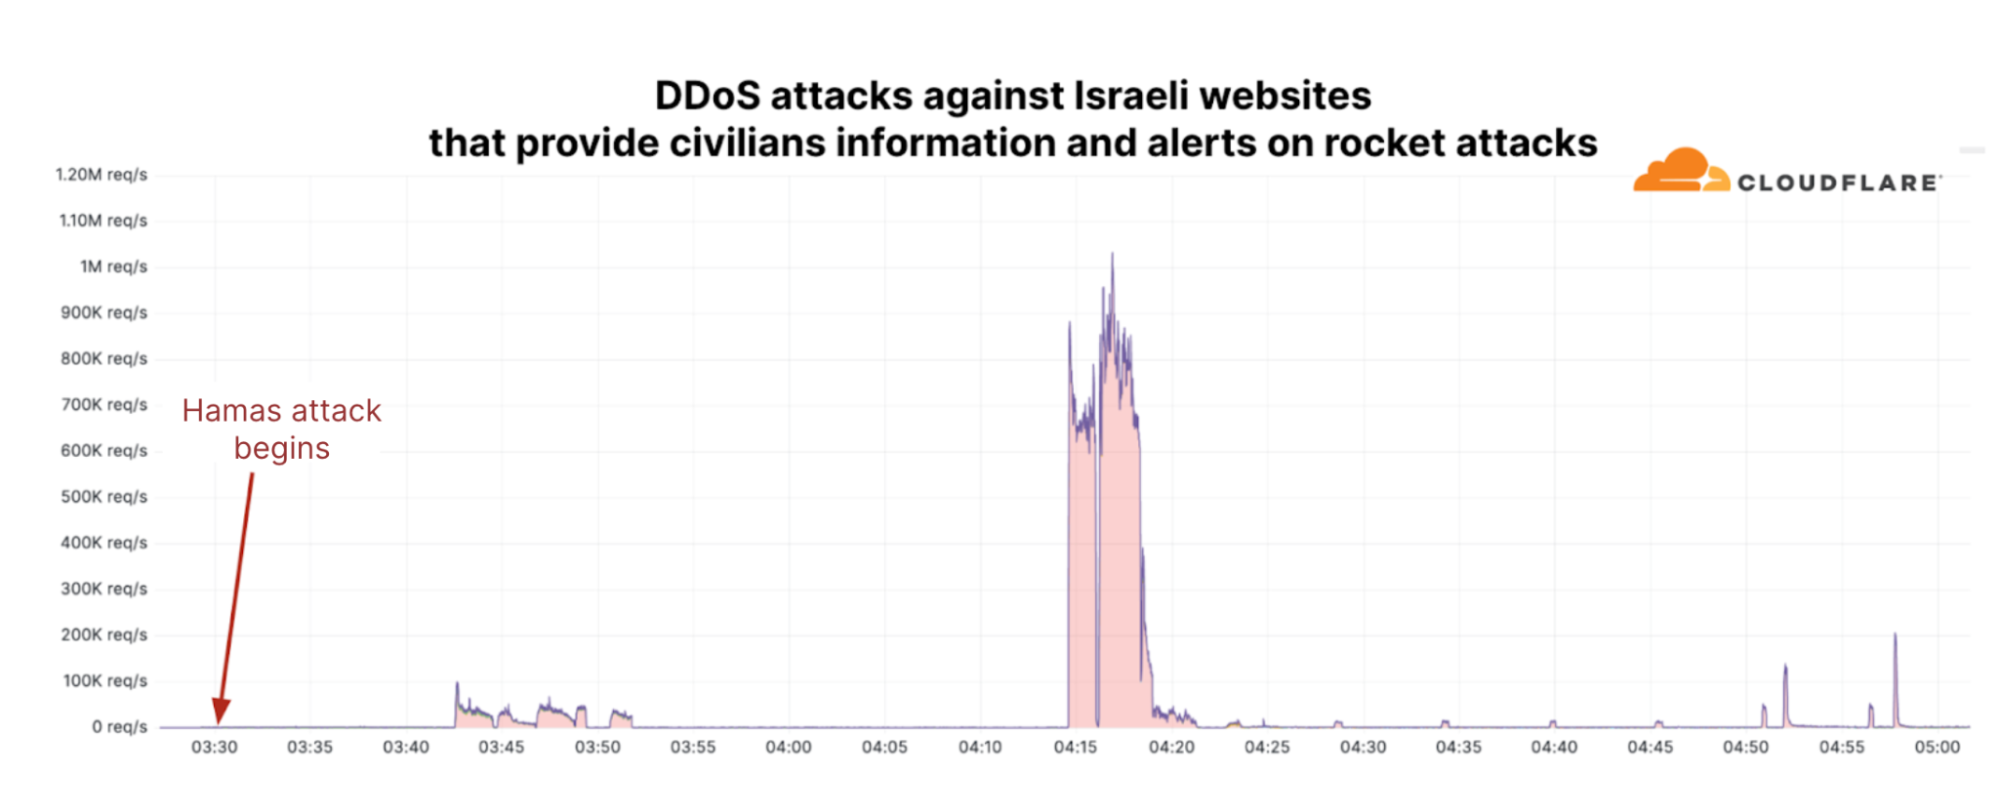 DDoS attacks against Israeli websites that provide civilians information and alerts on rocket attacks